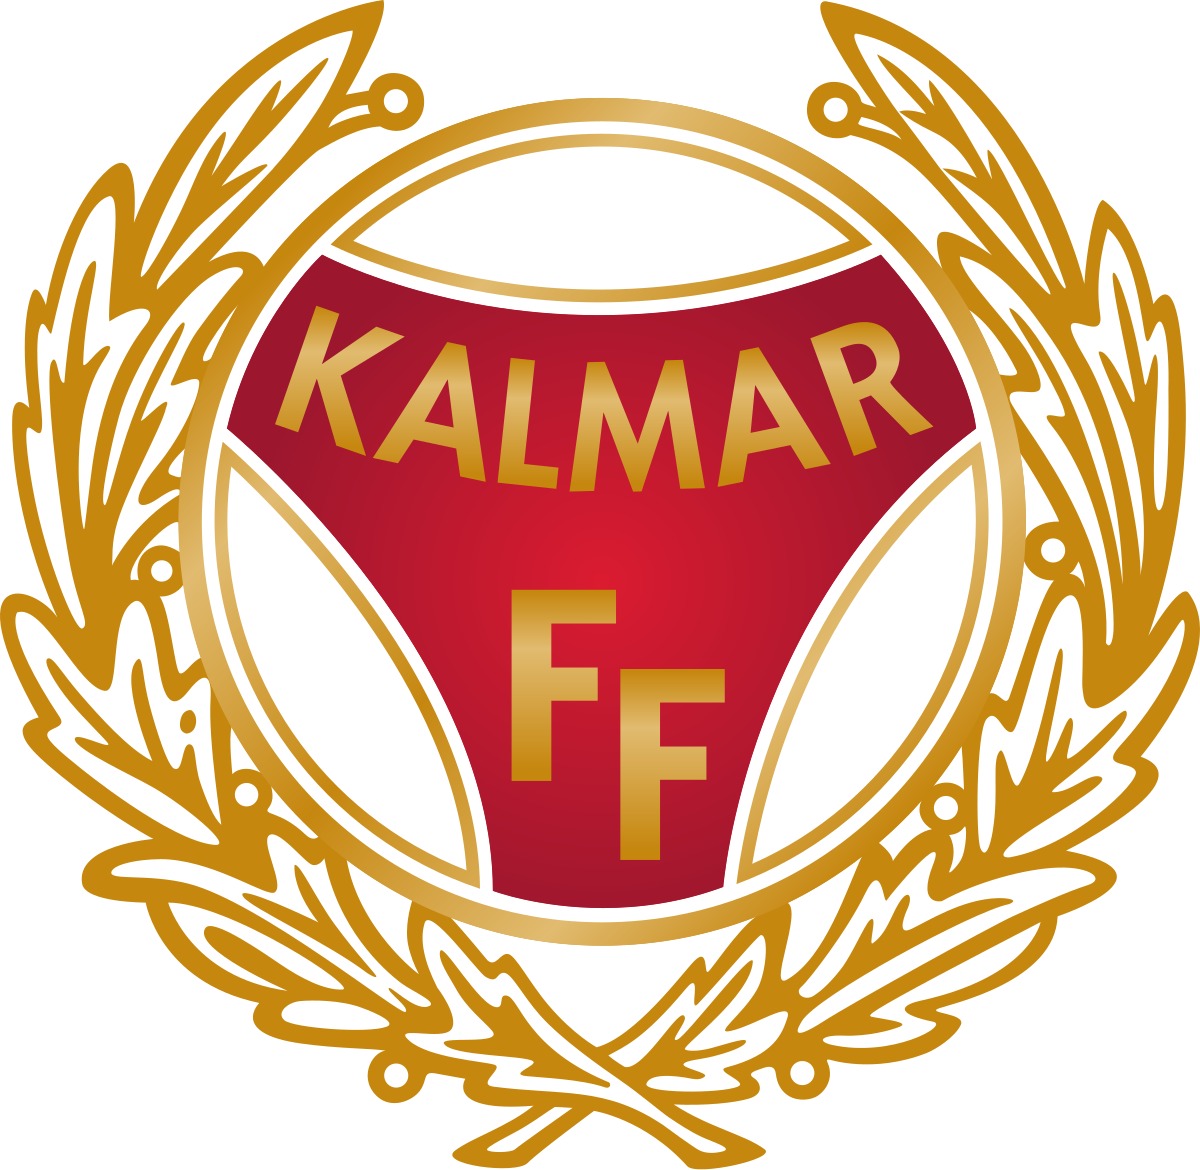 Kalmar U-21 logo